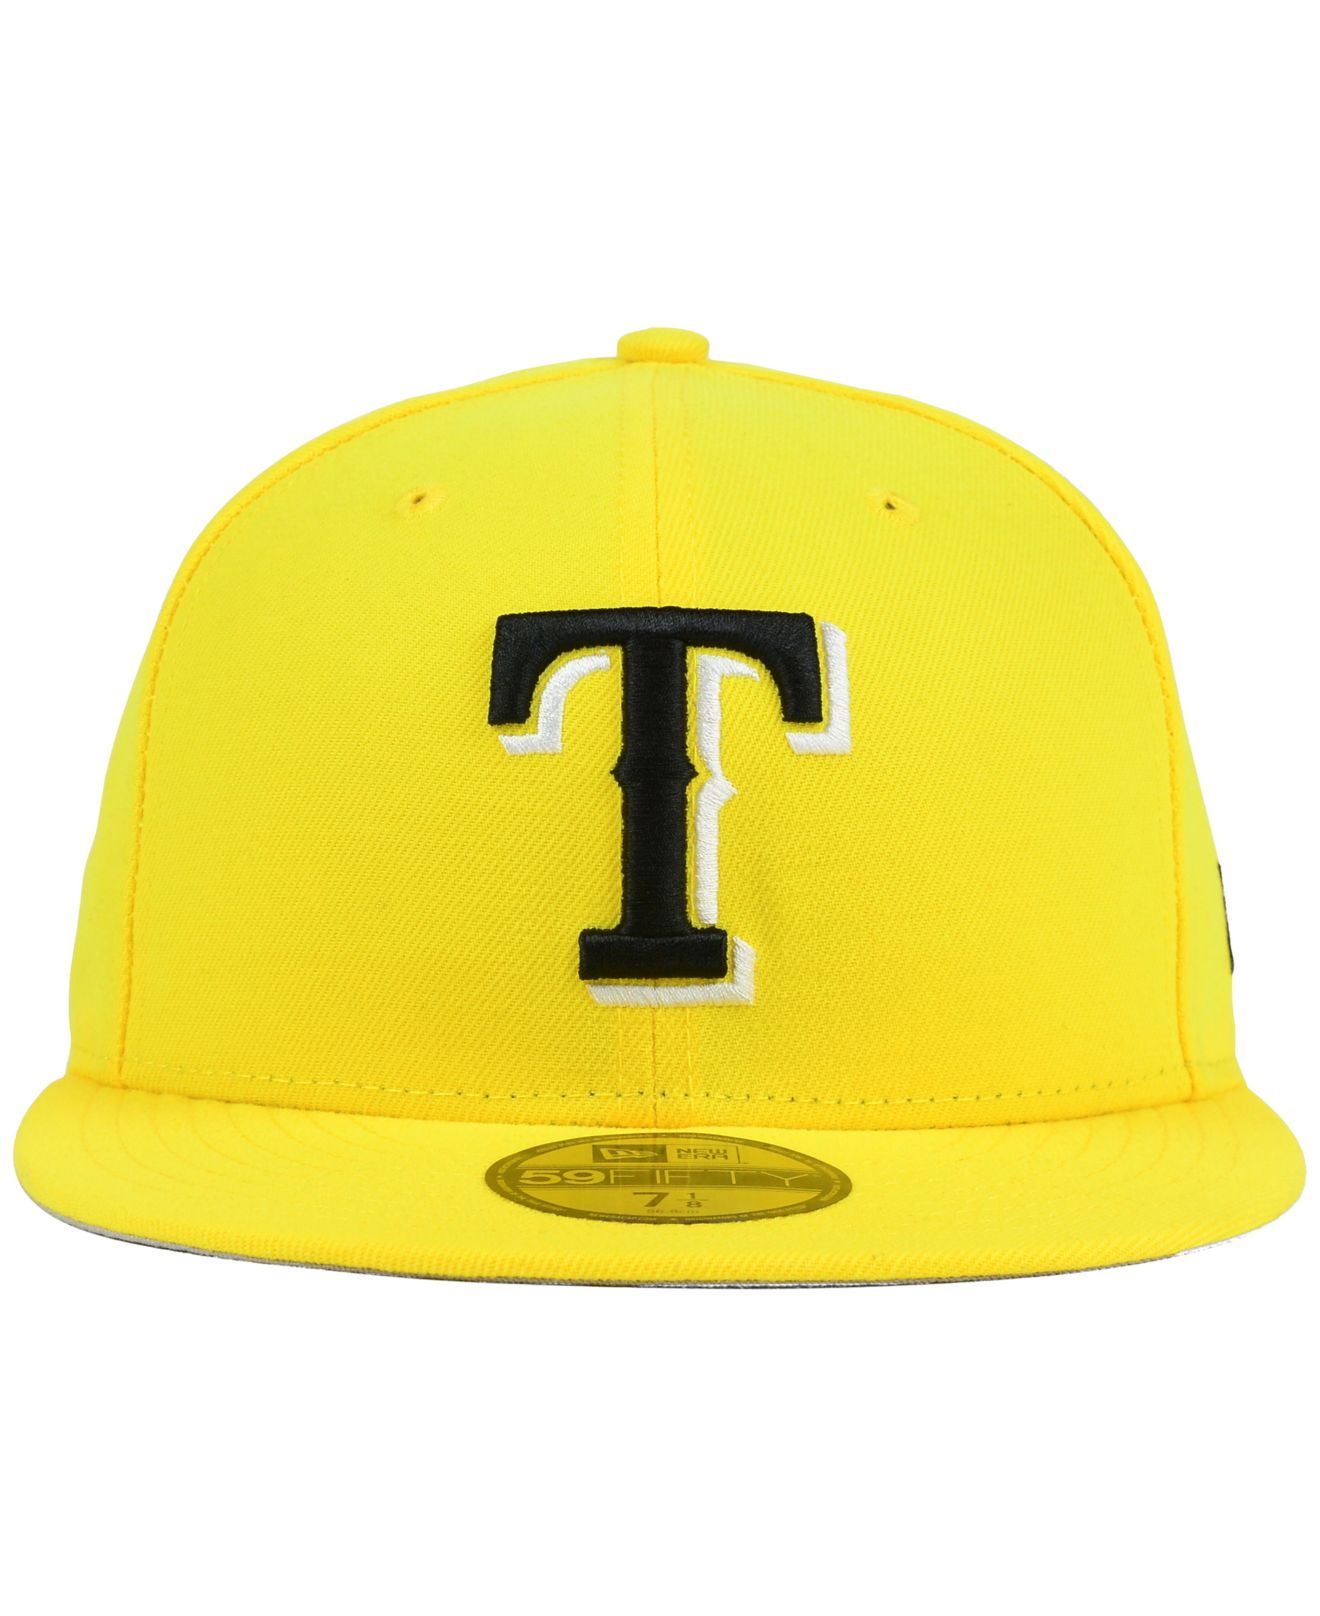 KTZ Texas Rangers C-dub 59fifty Cap in Yellow for Men